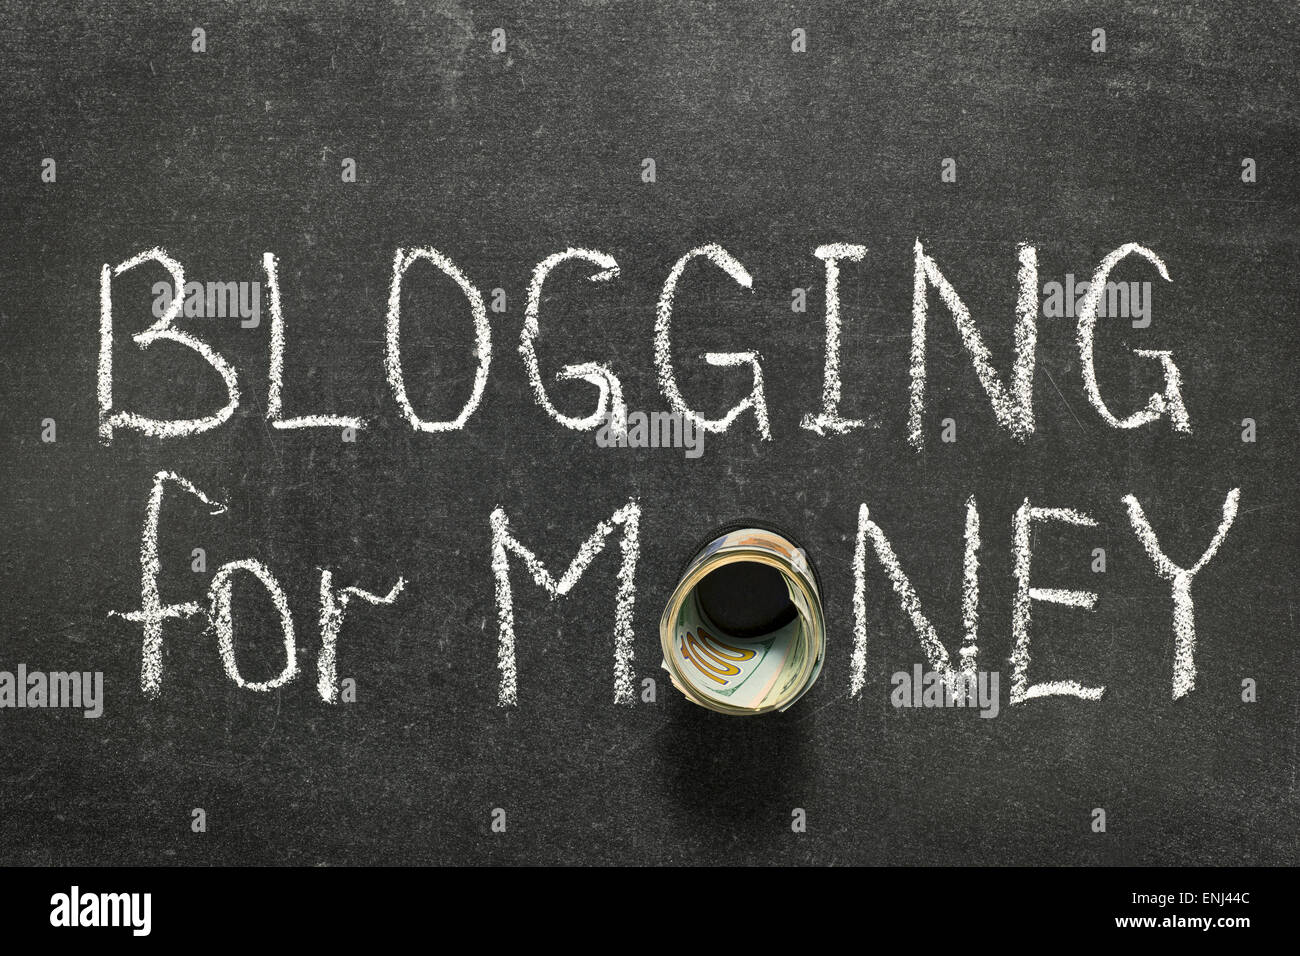 blogging for money phrase handwritten on blackboard with money roll instead of O Stock Photo